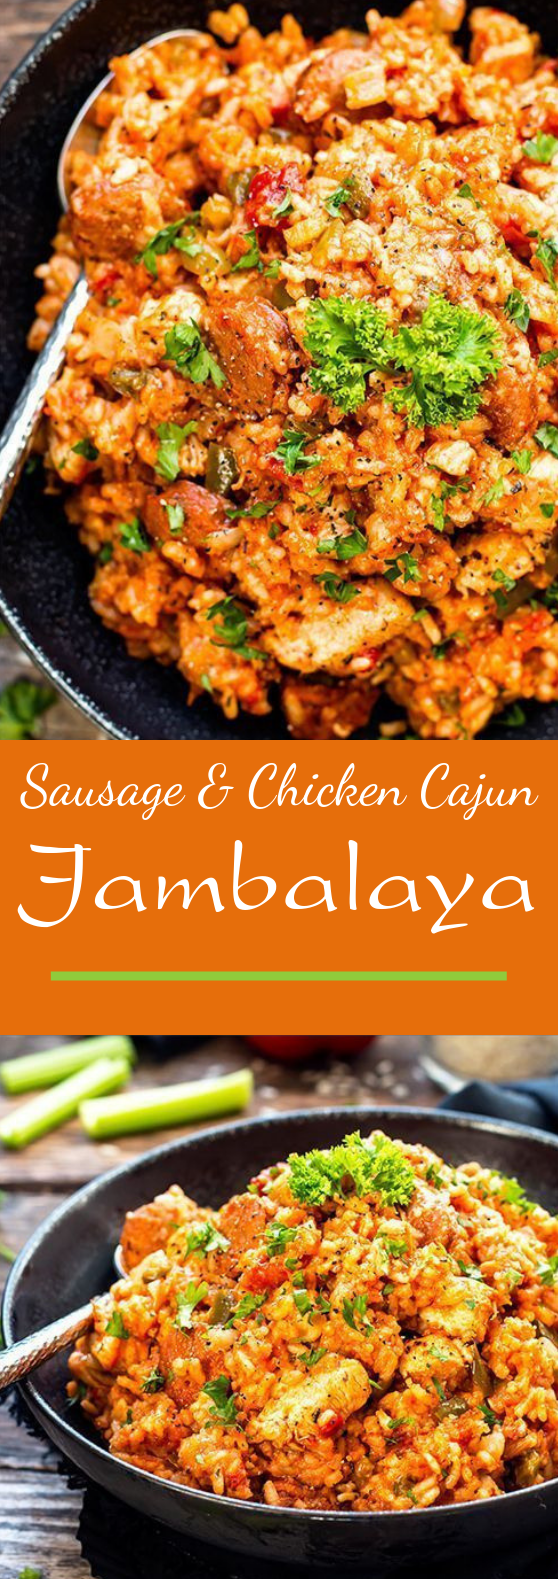 Sausage & Chicken Cajun Jambalaya #dinner #easyrecipe